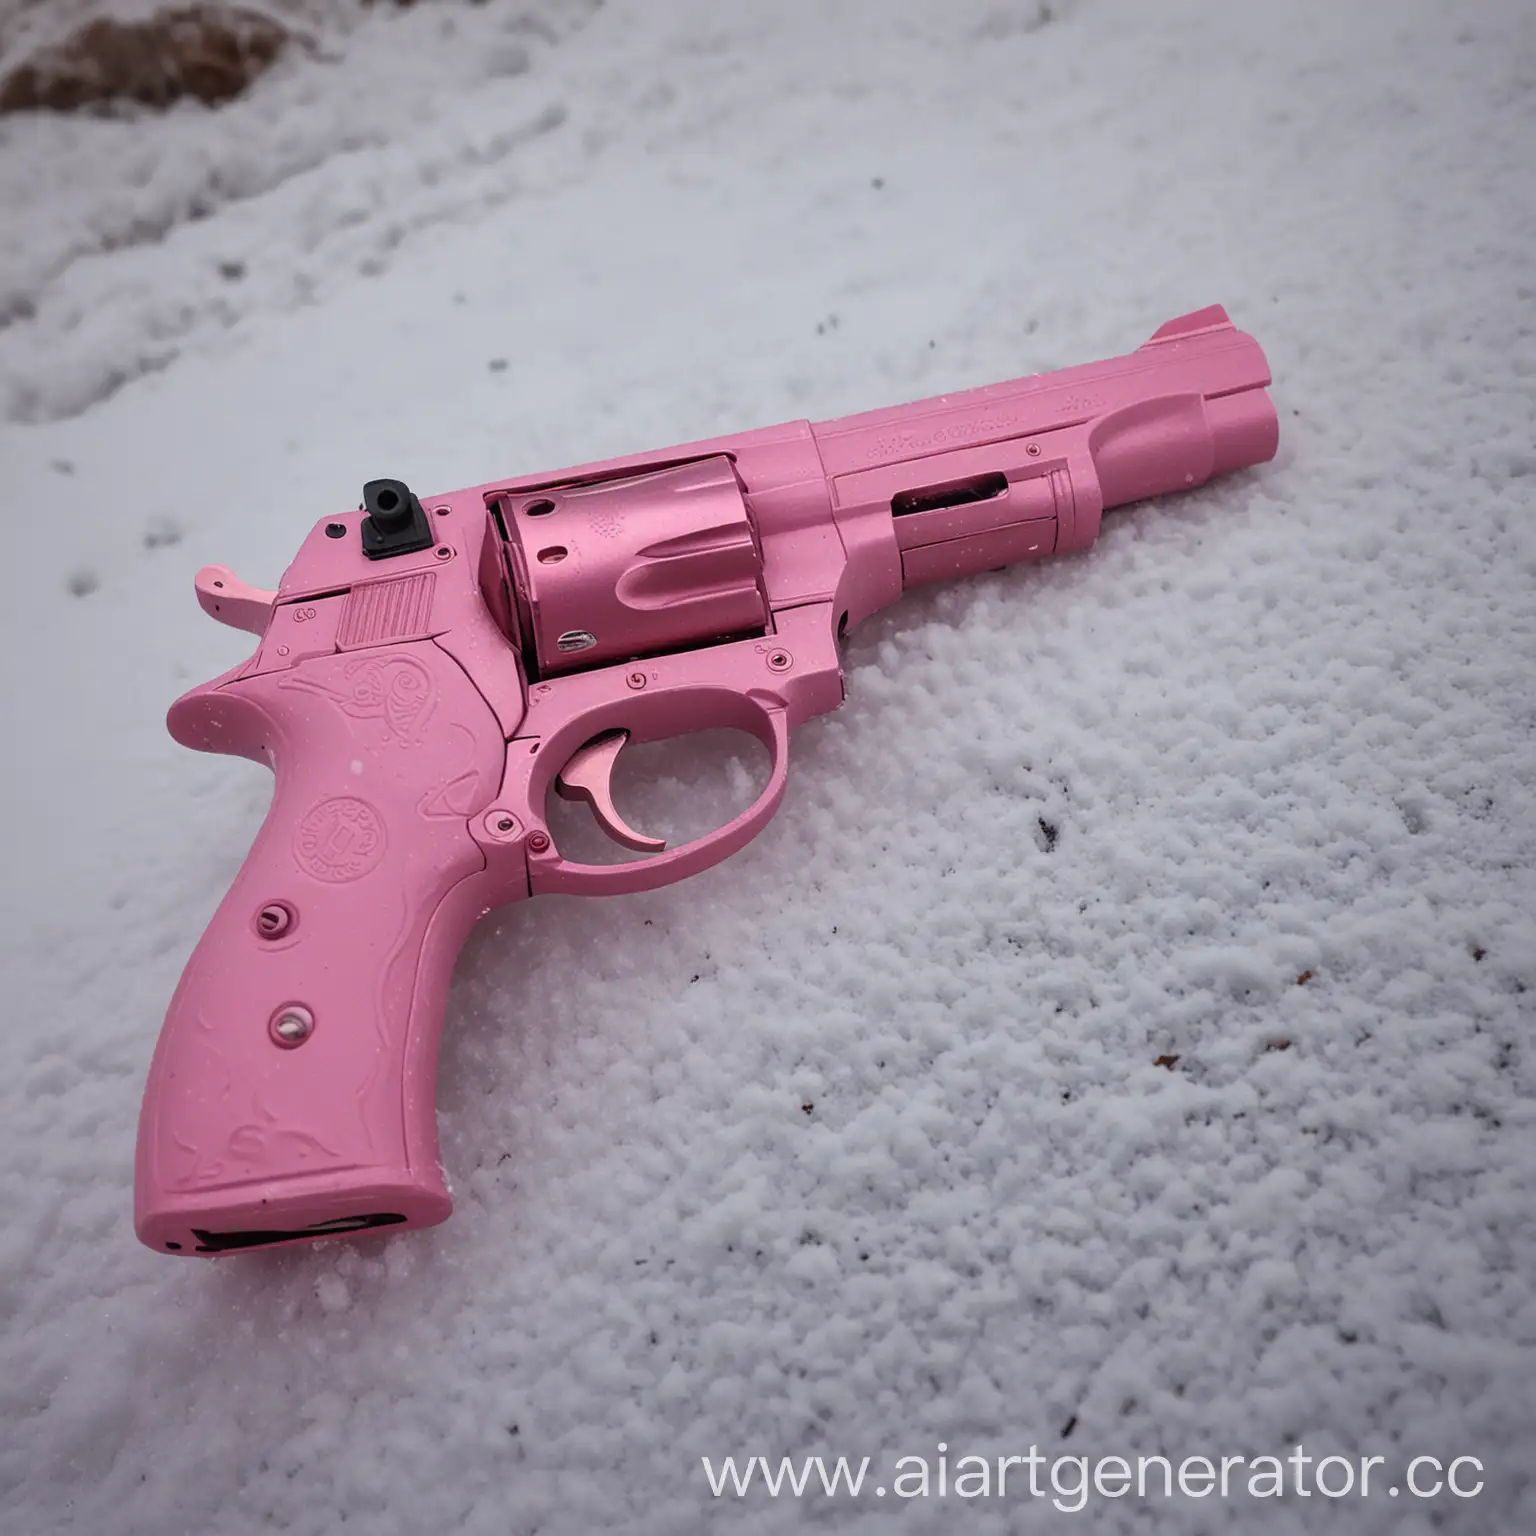 Розовый пистолет, холодно, хрущёвка, улица